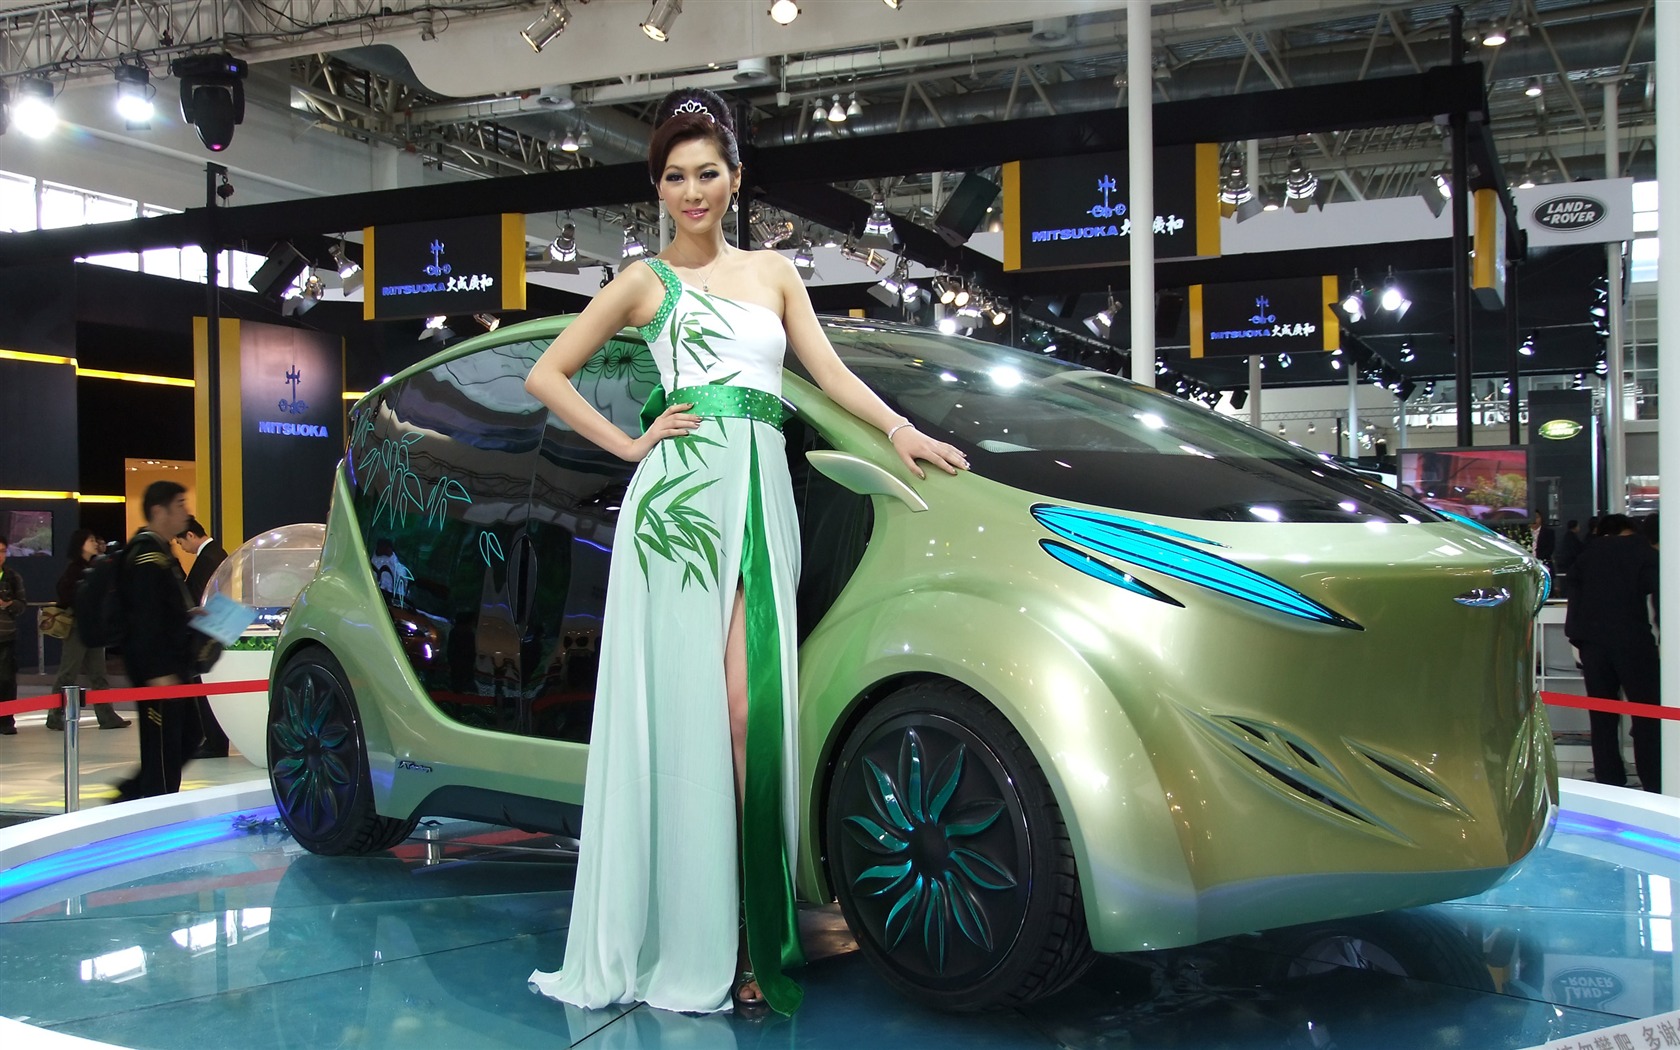 2010 Peking autosalonu modely aut odběrem (2) #2 - 1680x1050